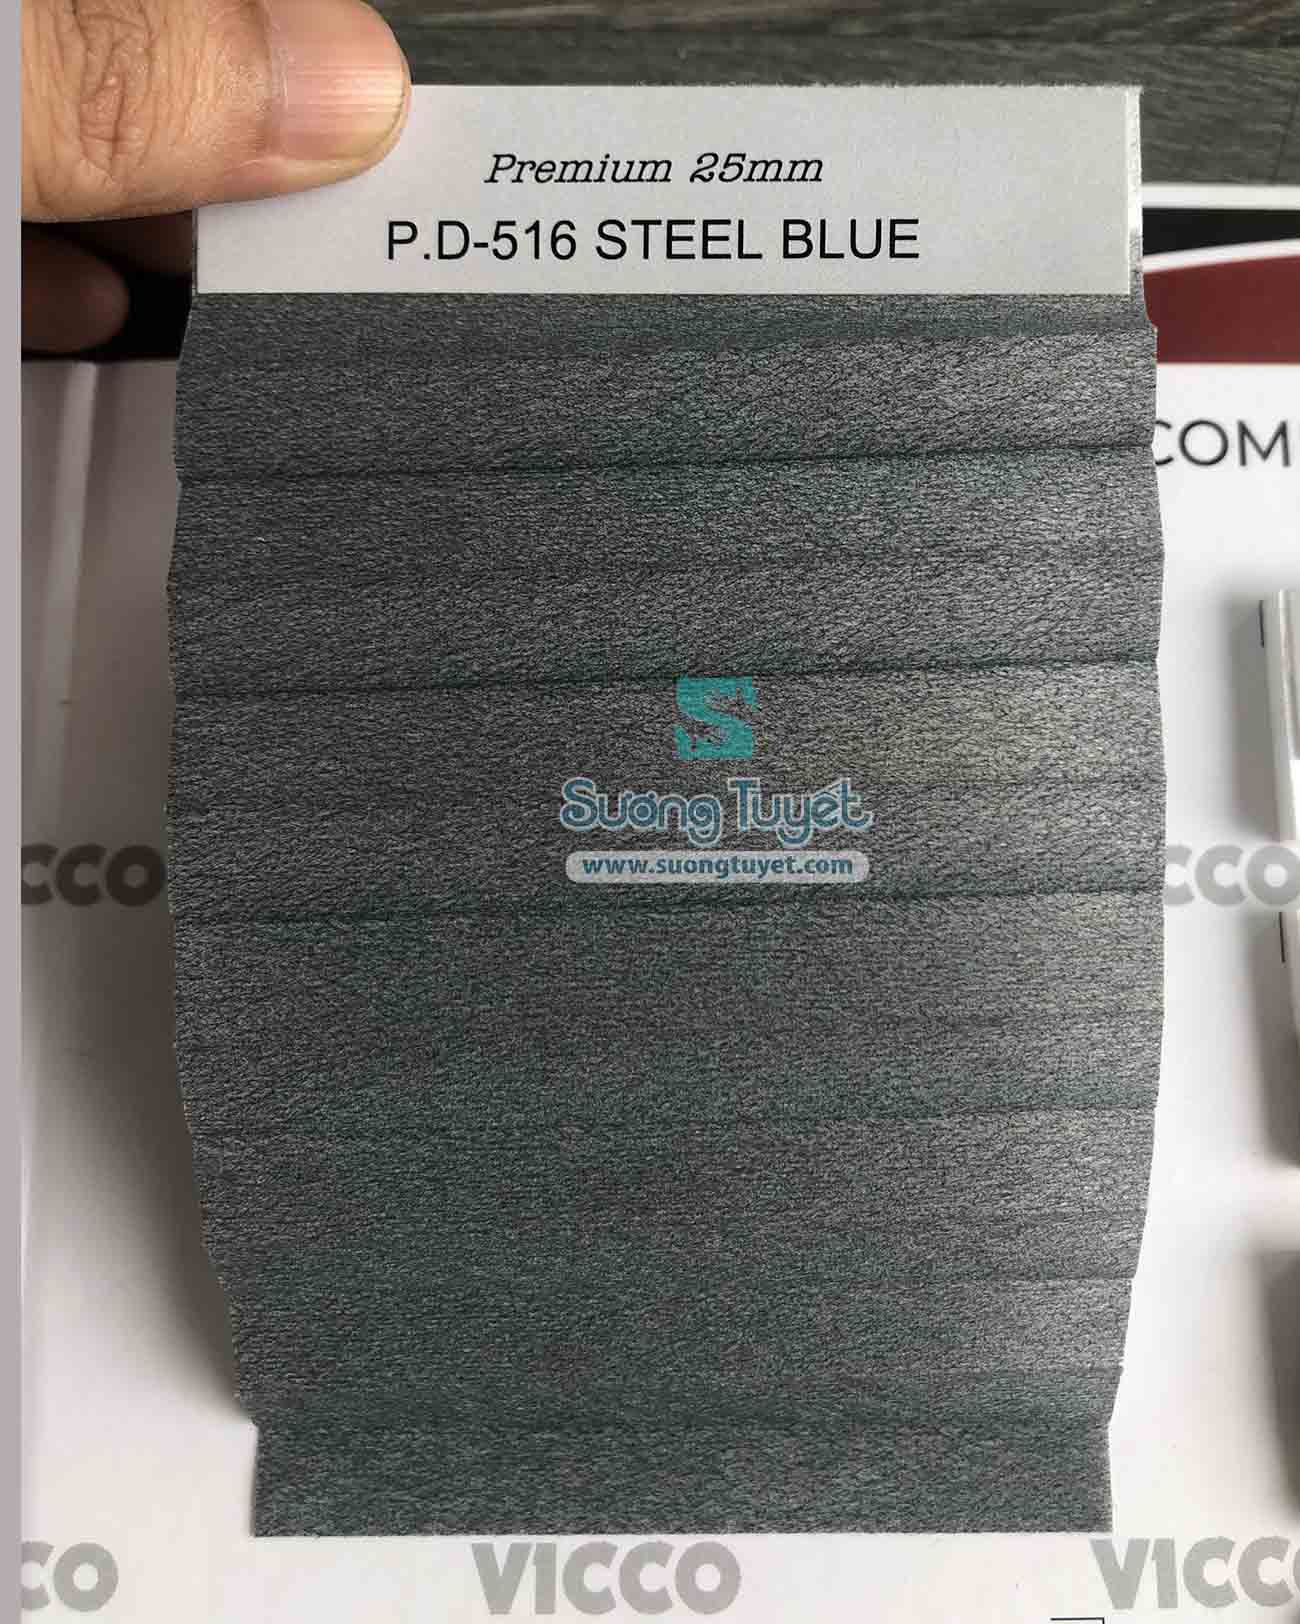 Mẫu rèm tổ ong Vicco Premium P.D-516 Steel Blue.